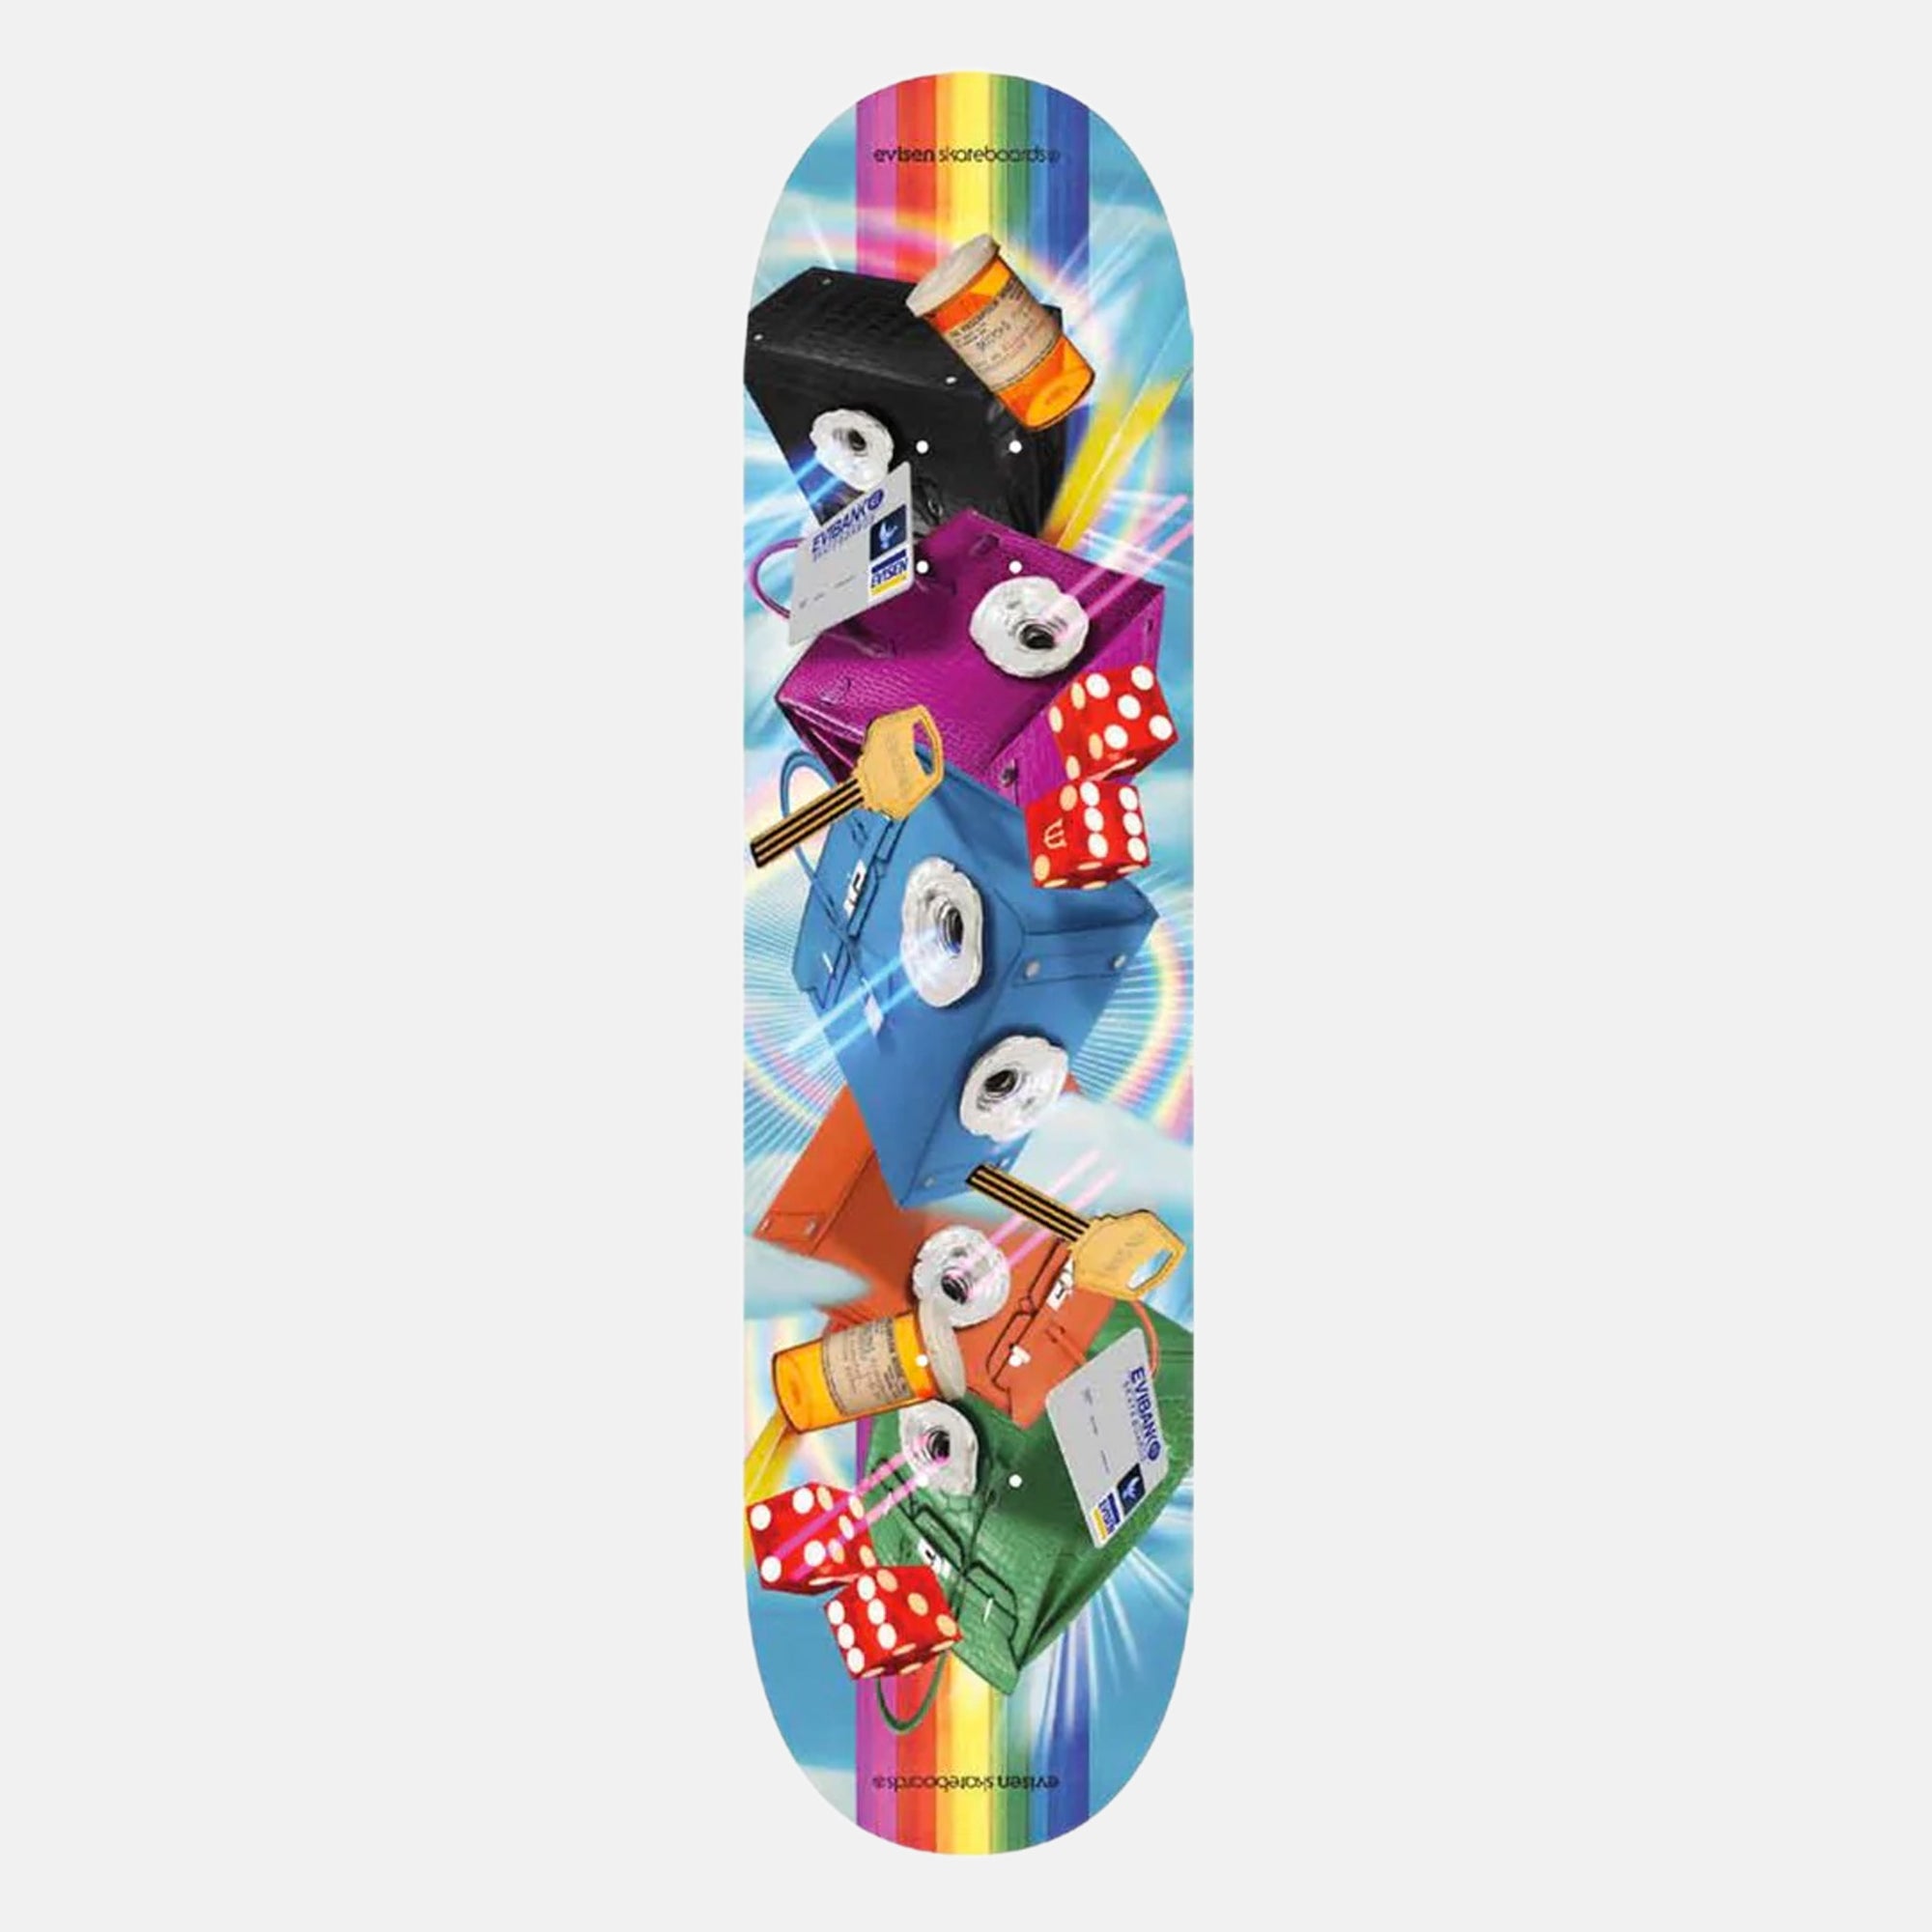 Evisen Skateboards - 8.06" Rainbow Skateboard Deck